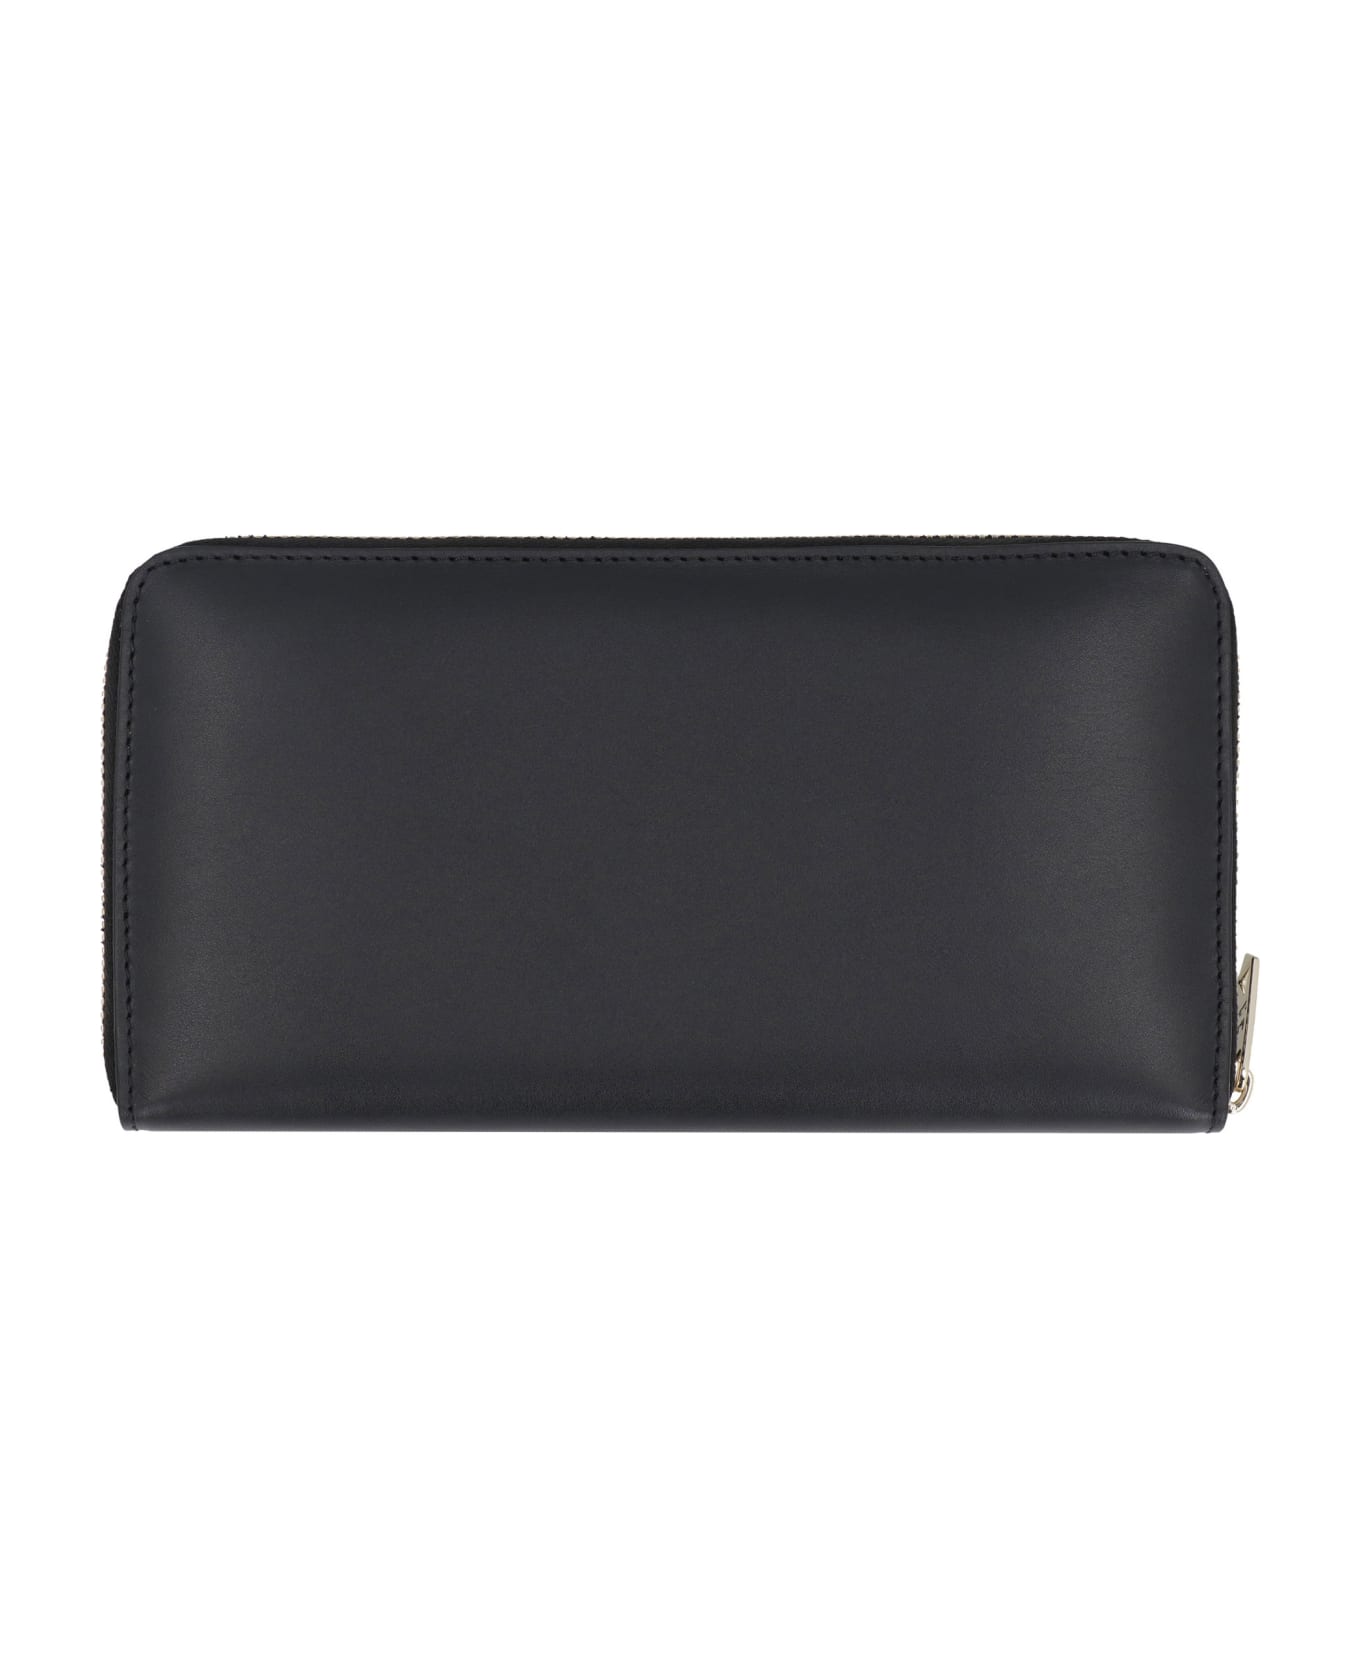 Paul Smith Leather Zip Around Wallet - black